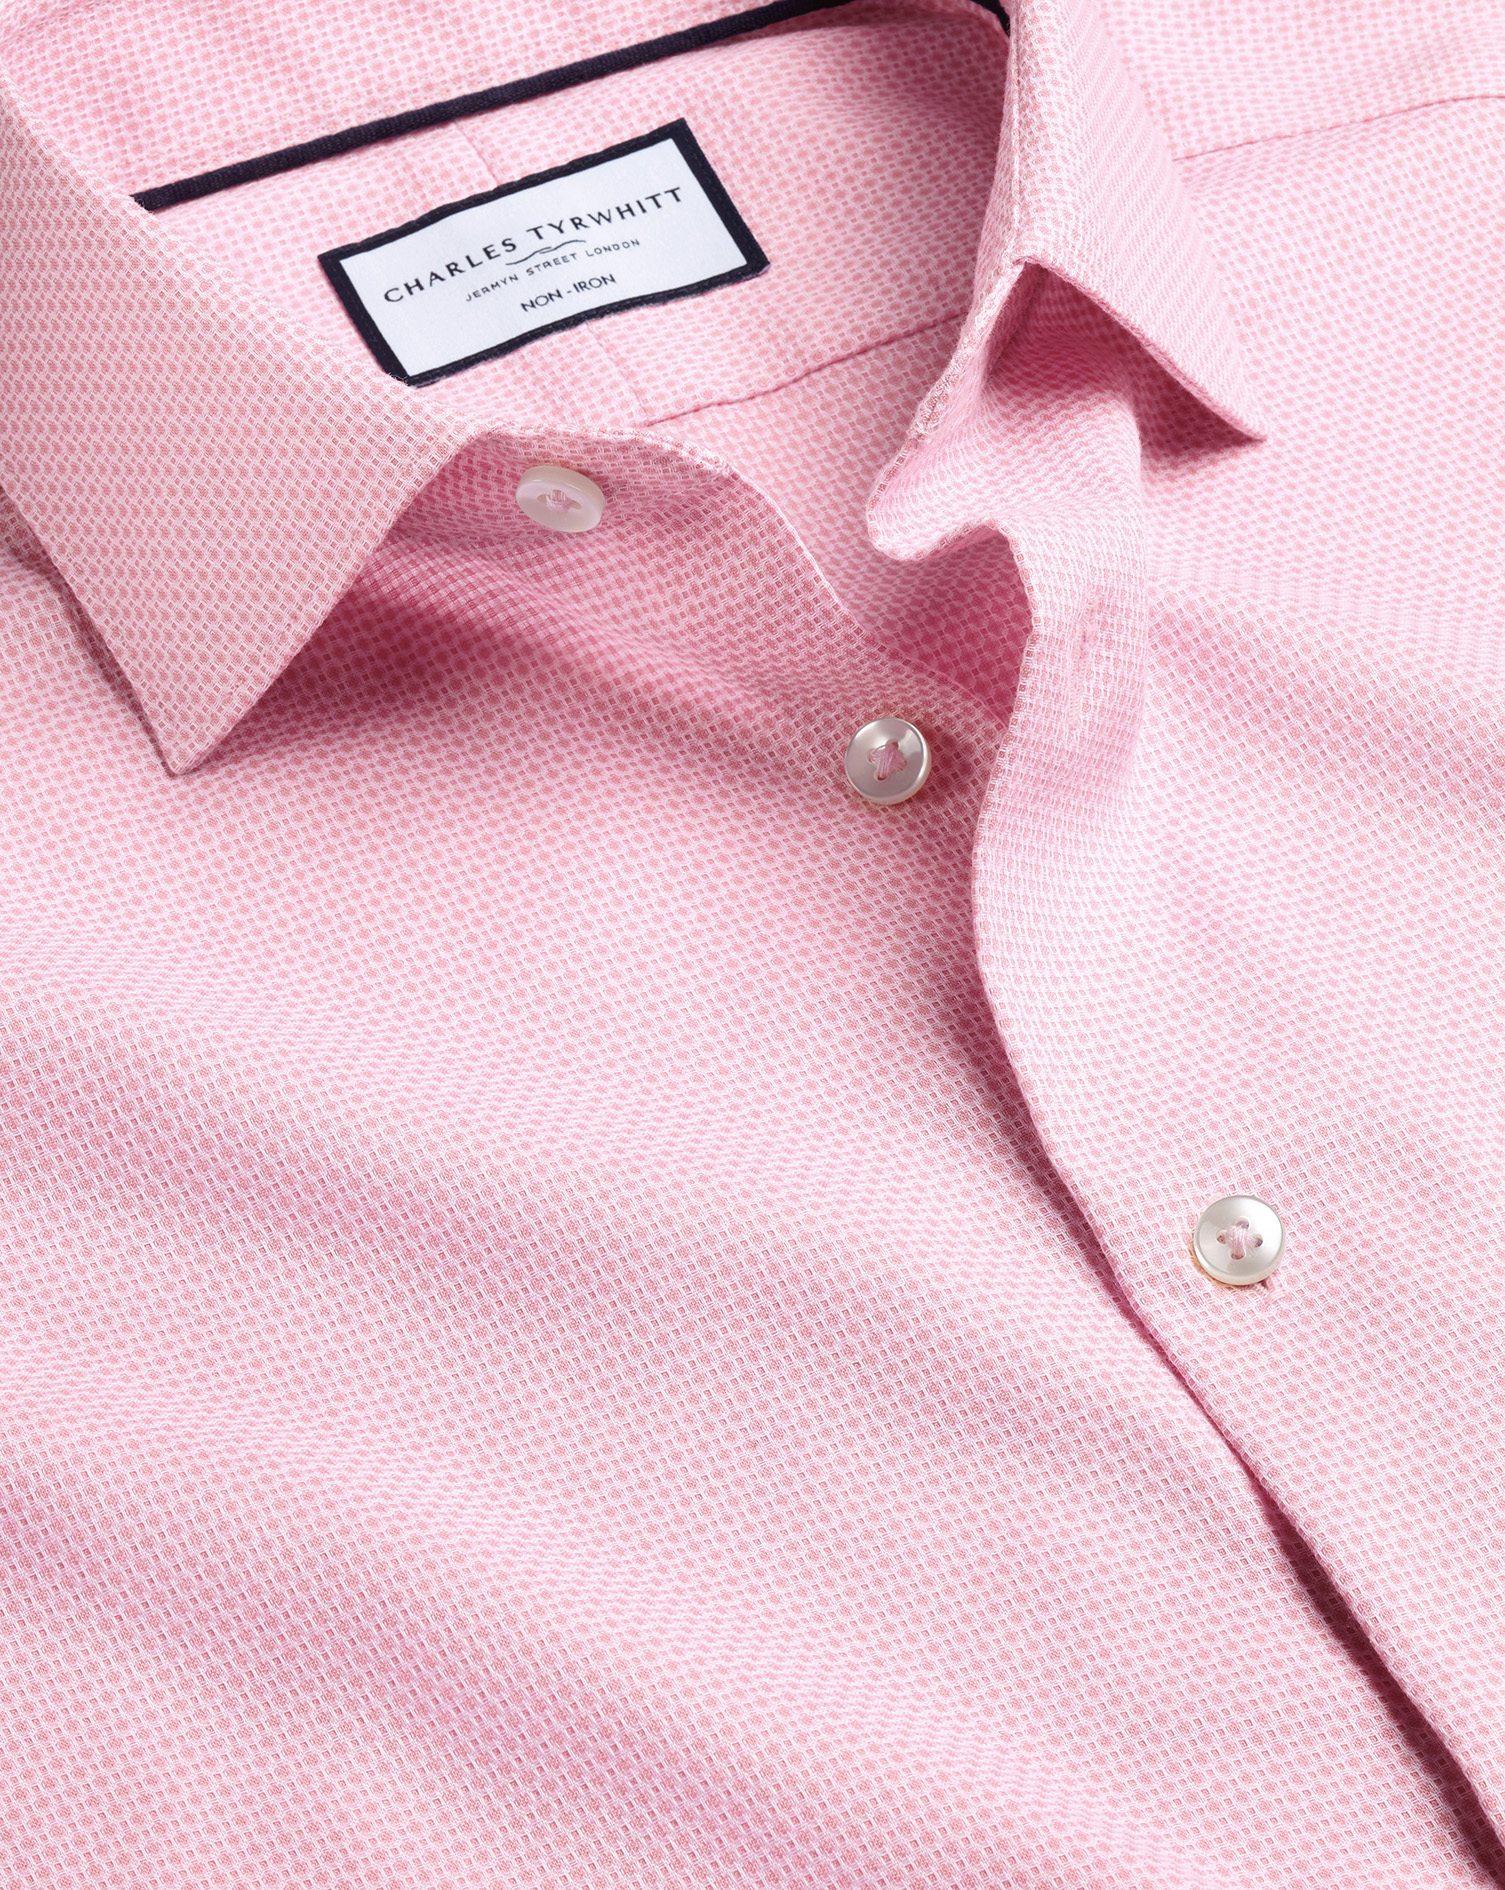 Men's Charles Tyrwhitt Non-Iron Stretch Texture Oval Dress Shirt - Pink Single Cuff Size 16.5/36 Cot